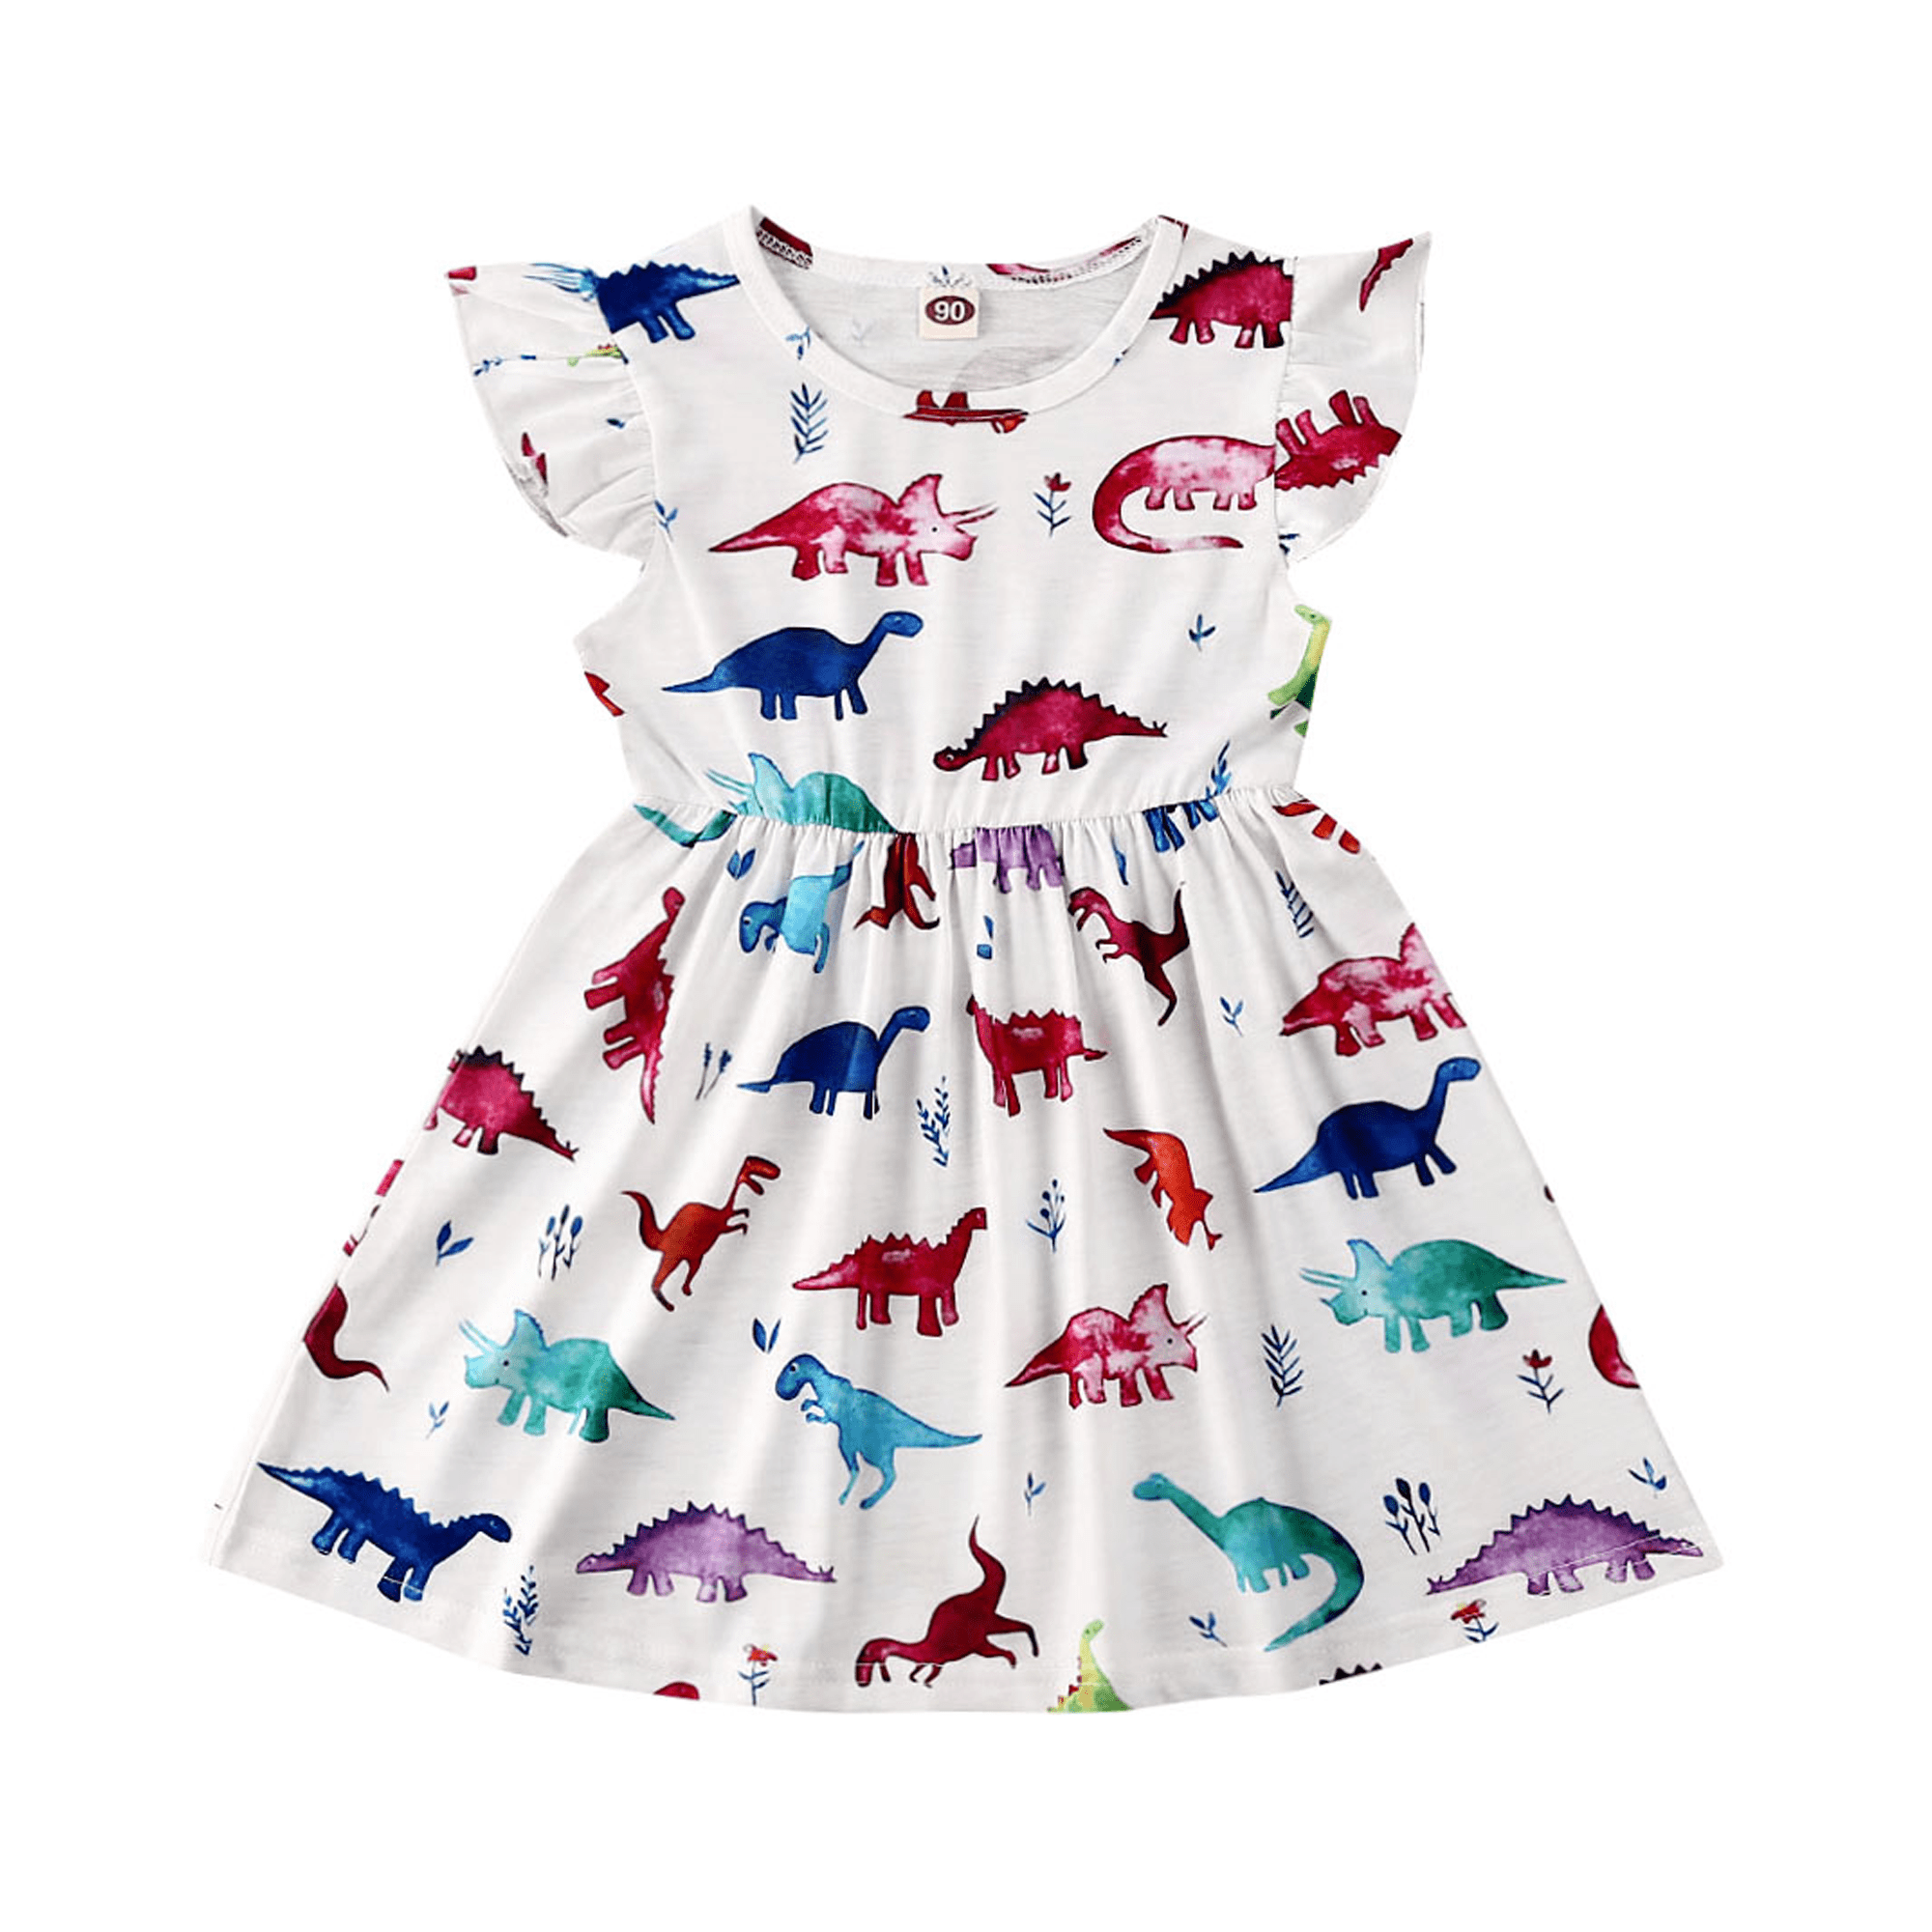 Iuhan Summer Girls Dresses Clothes for Toddler Kids Baby Girl Cartoon Dinosaur Print Tunic Casual Princess Party Dress